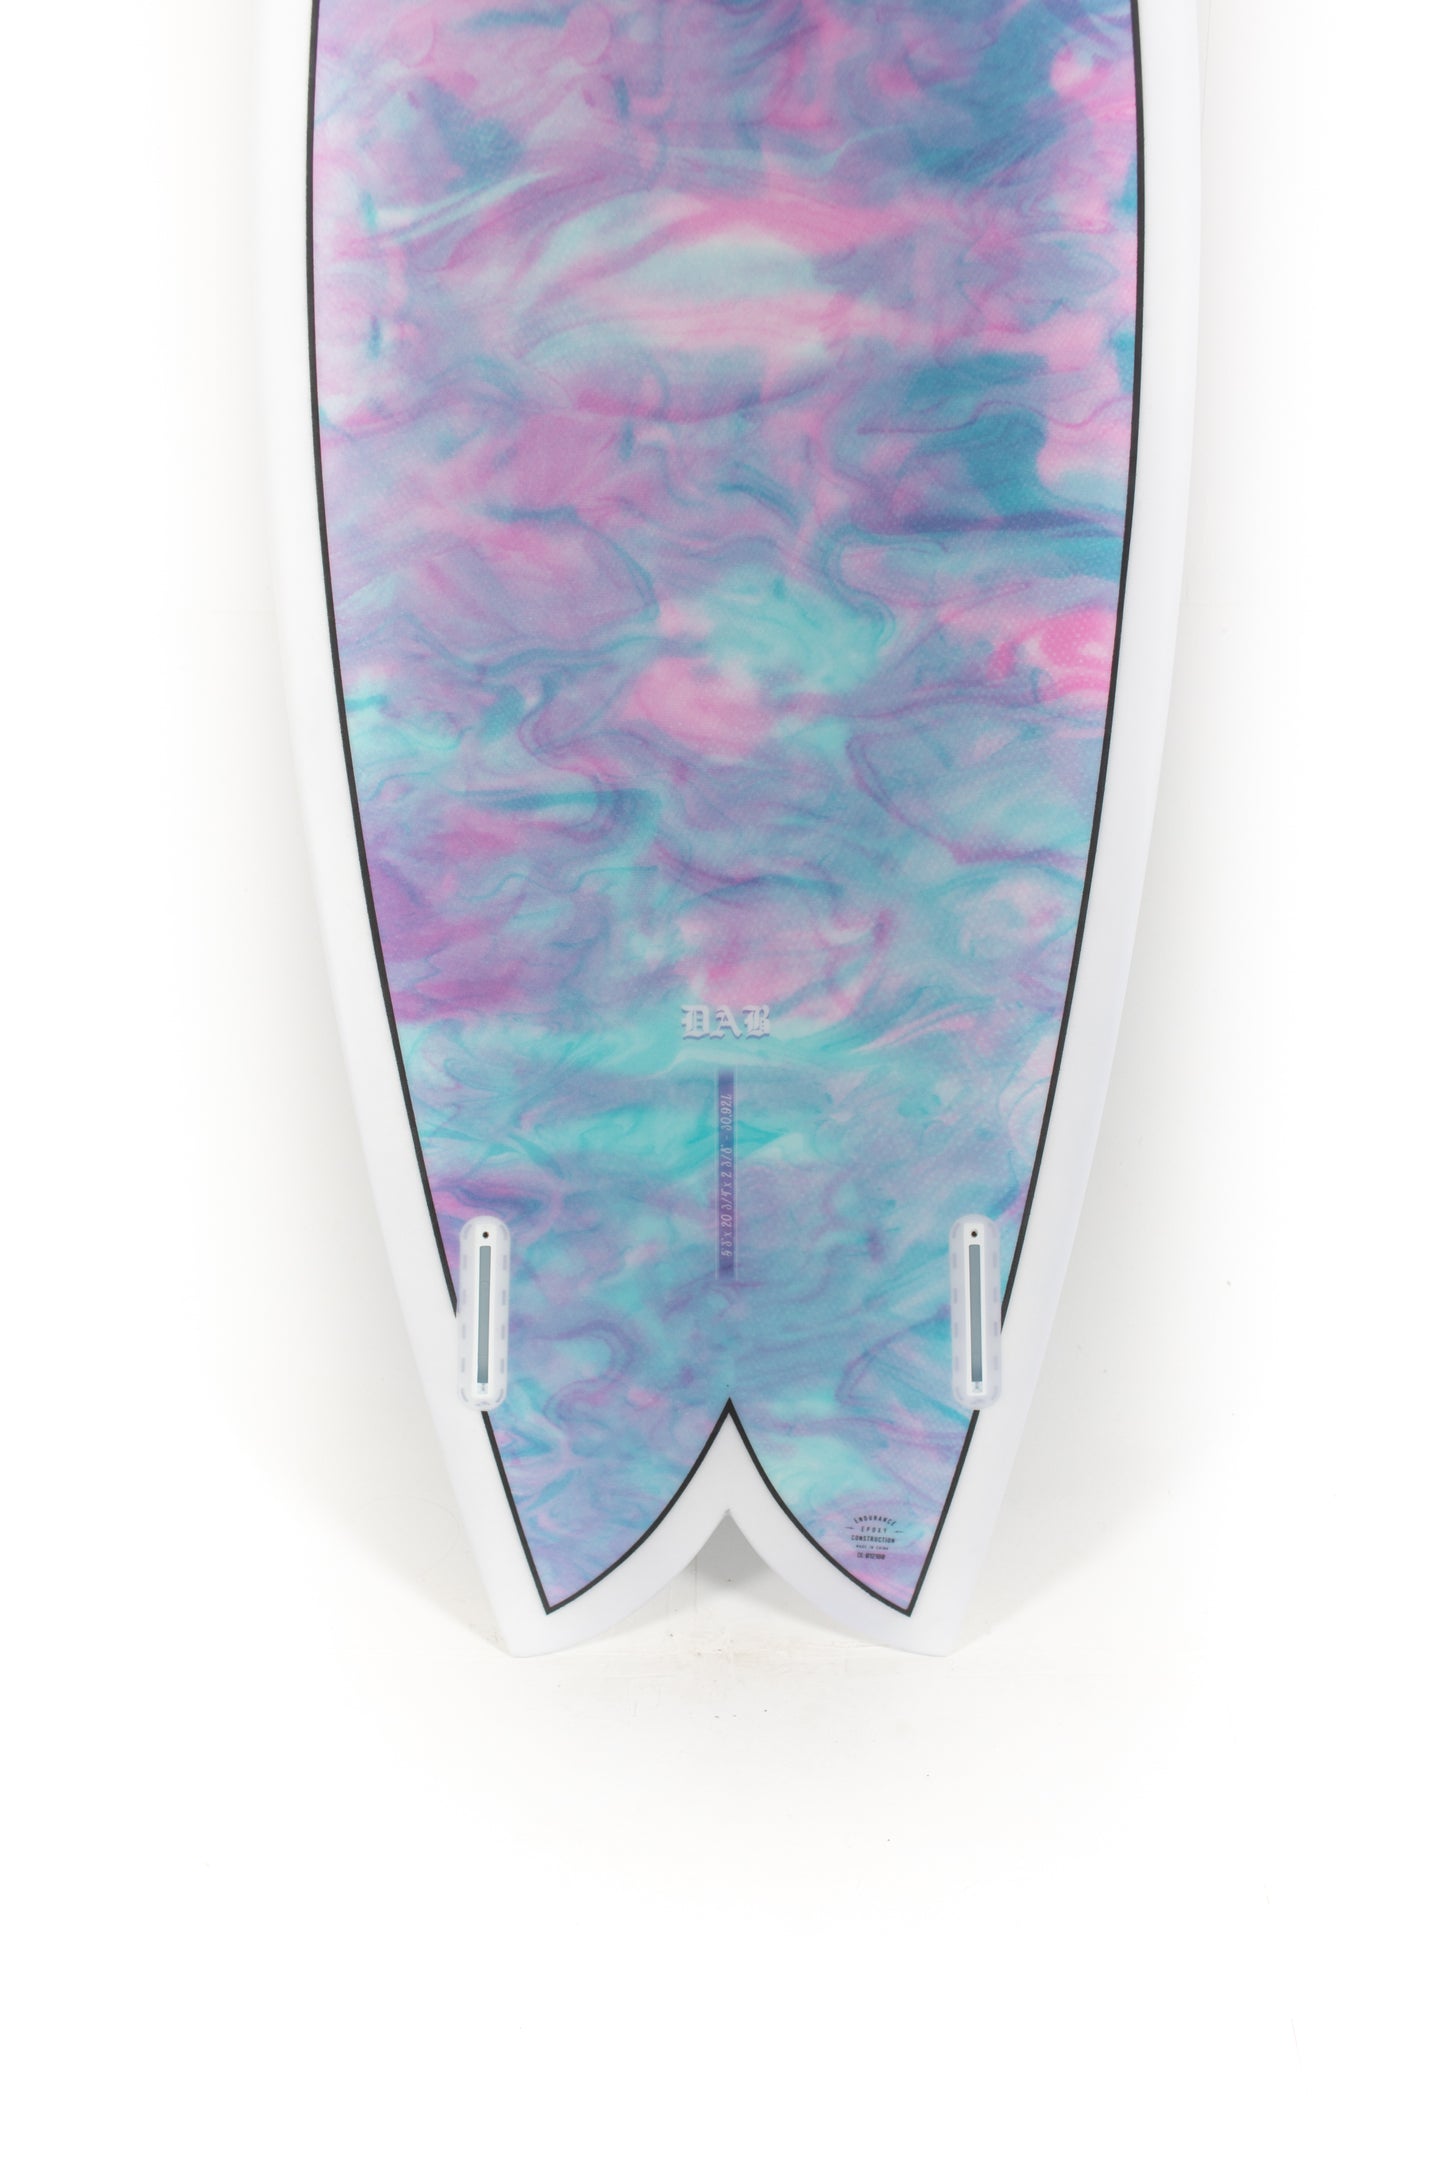 
                  
                    Pukas Surf Shop - Indio Surfboards - DAB Swirl Effect Blue Purple - 5’3” x 20 3/4 x 2 3/8 x 30.92L.
                  
                